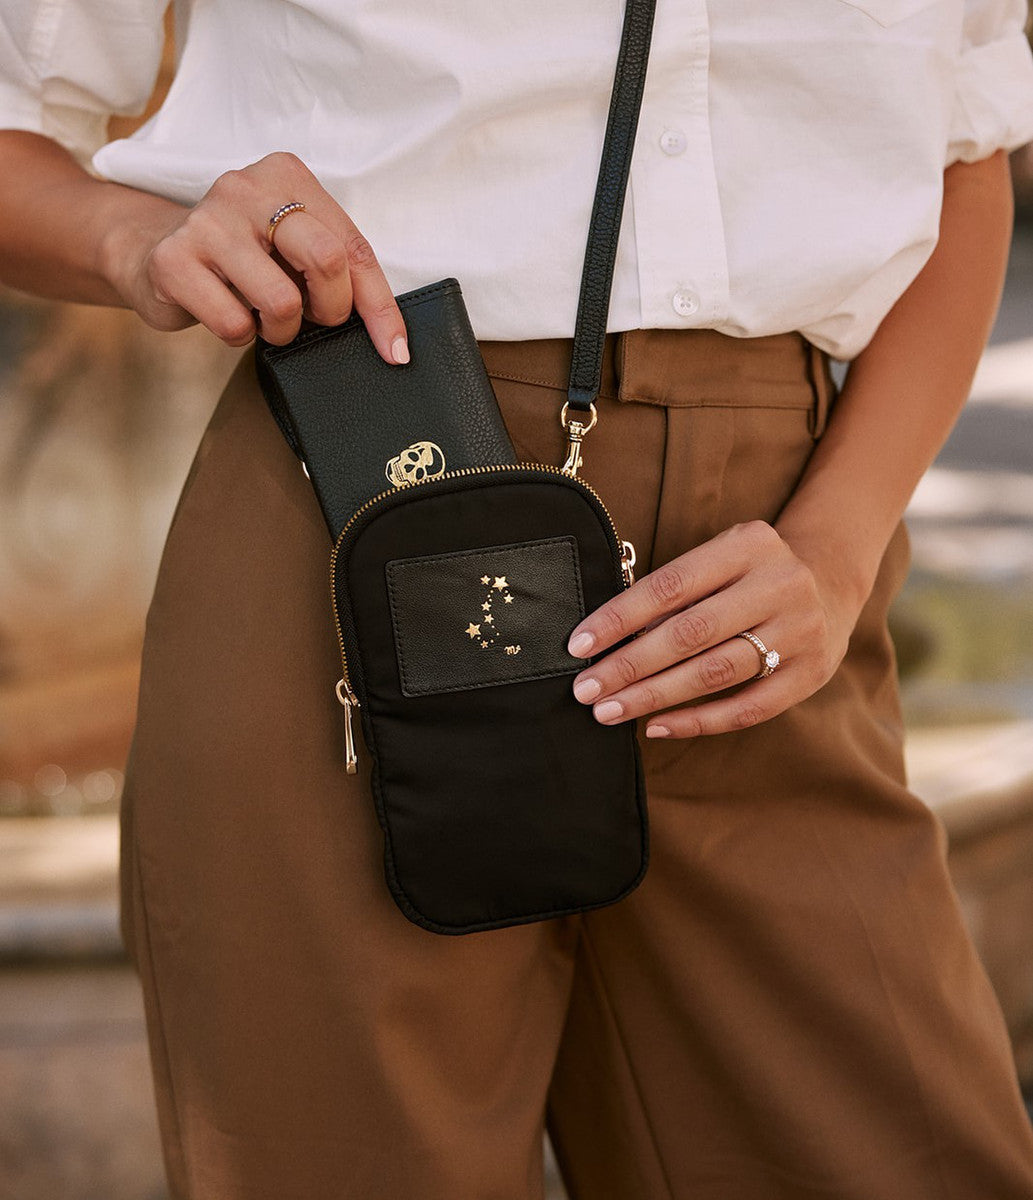 XOXO Butterfly Black Purse Bag on Mercari | Black purses, Bags, Butterfly